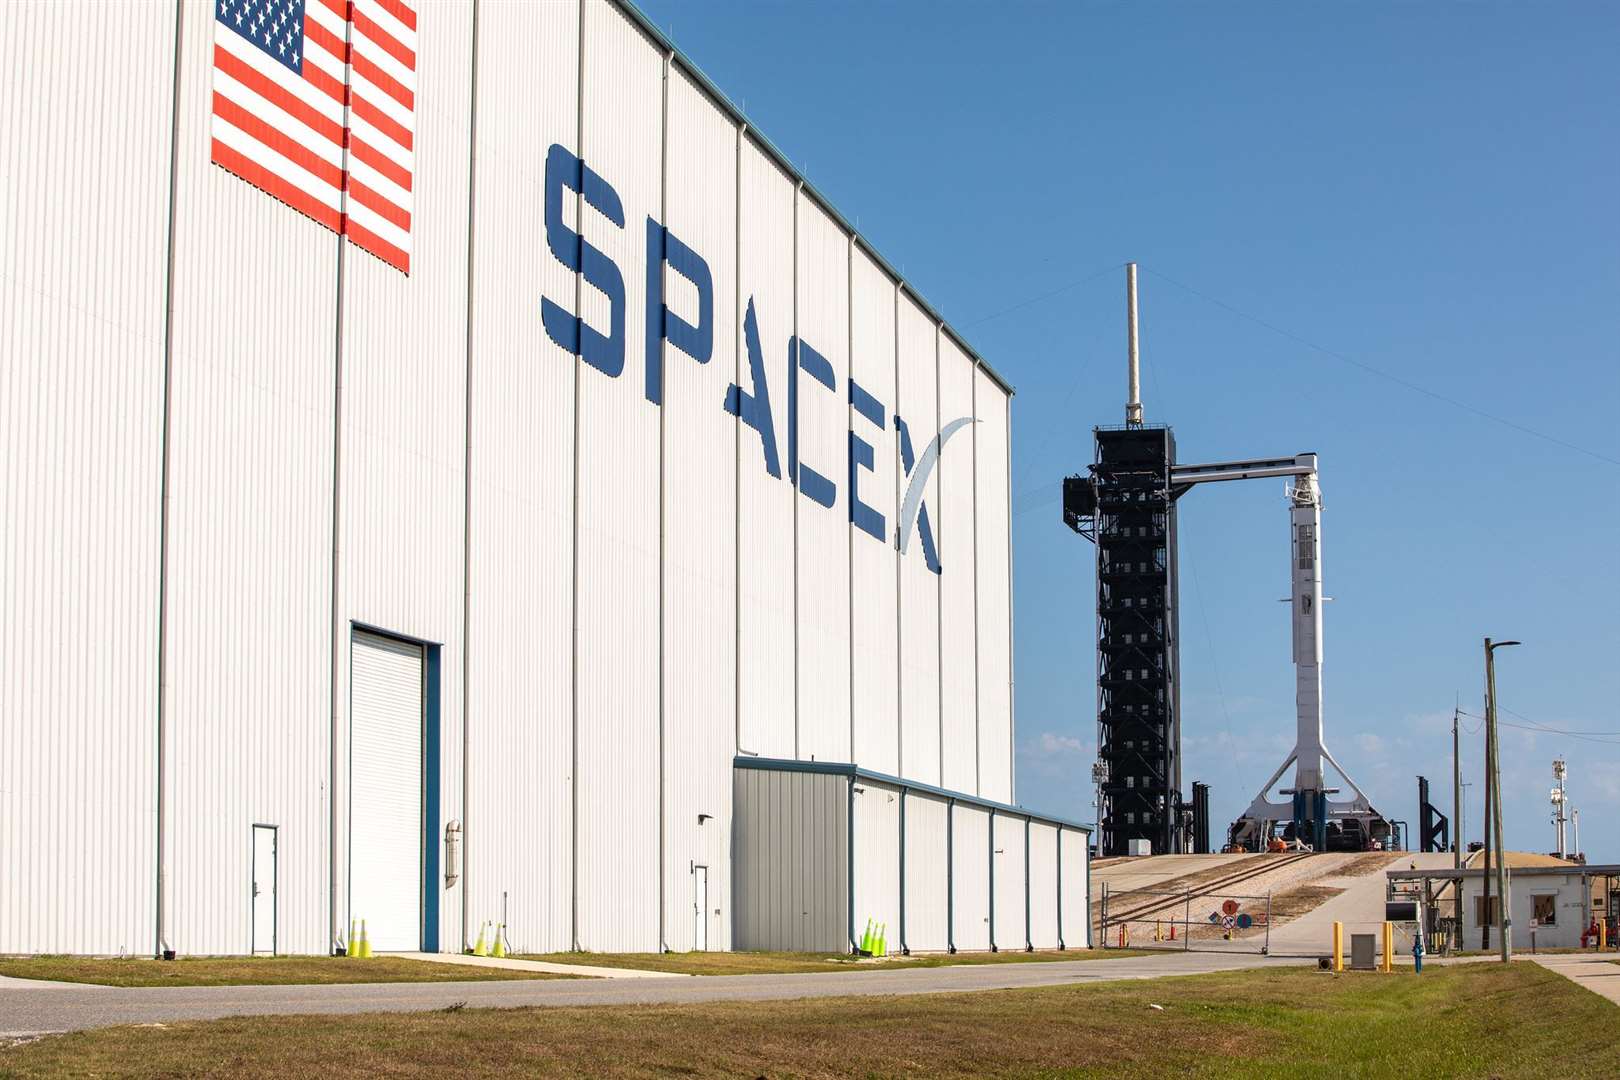 SpaceX’s Falcon 9 rocket ready for launch (Kim Shiflett/Nasa)